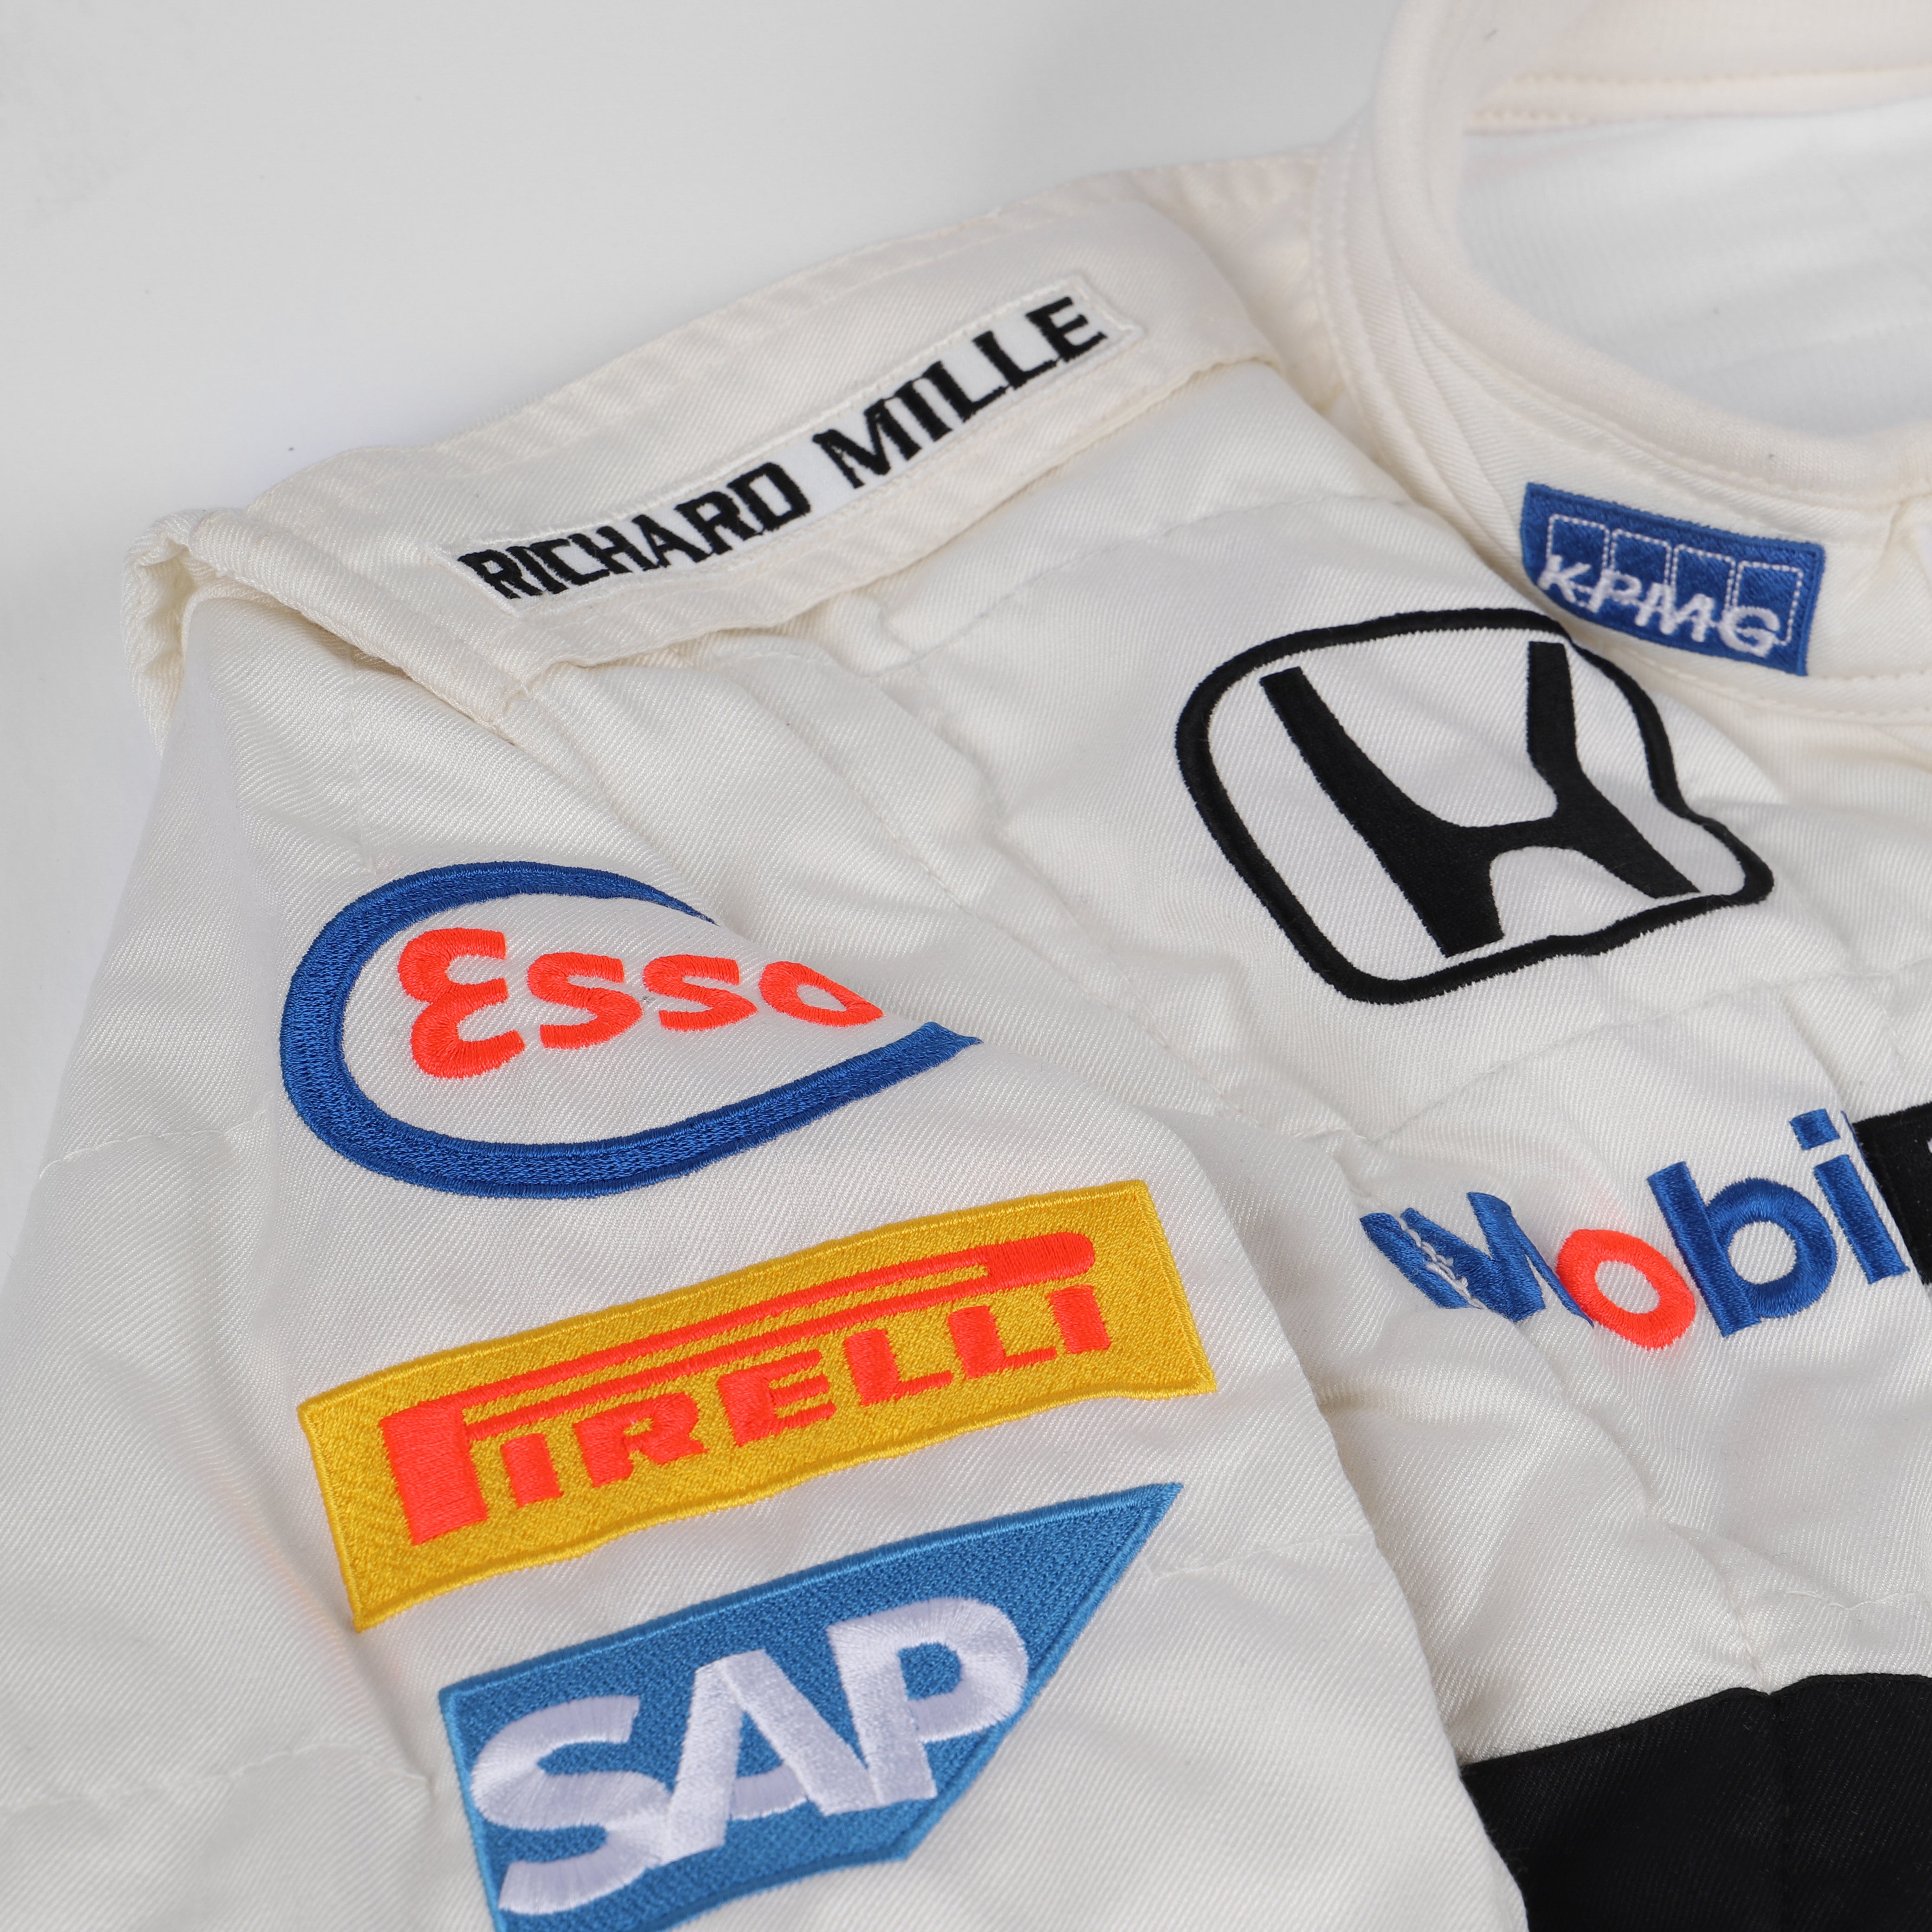 Jenson Button 2015 Replica McLaren F1 Team Race Suit - Chandon , Johnnie Walker & Segafredo Branding